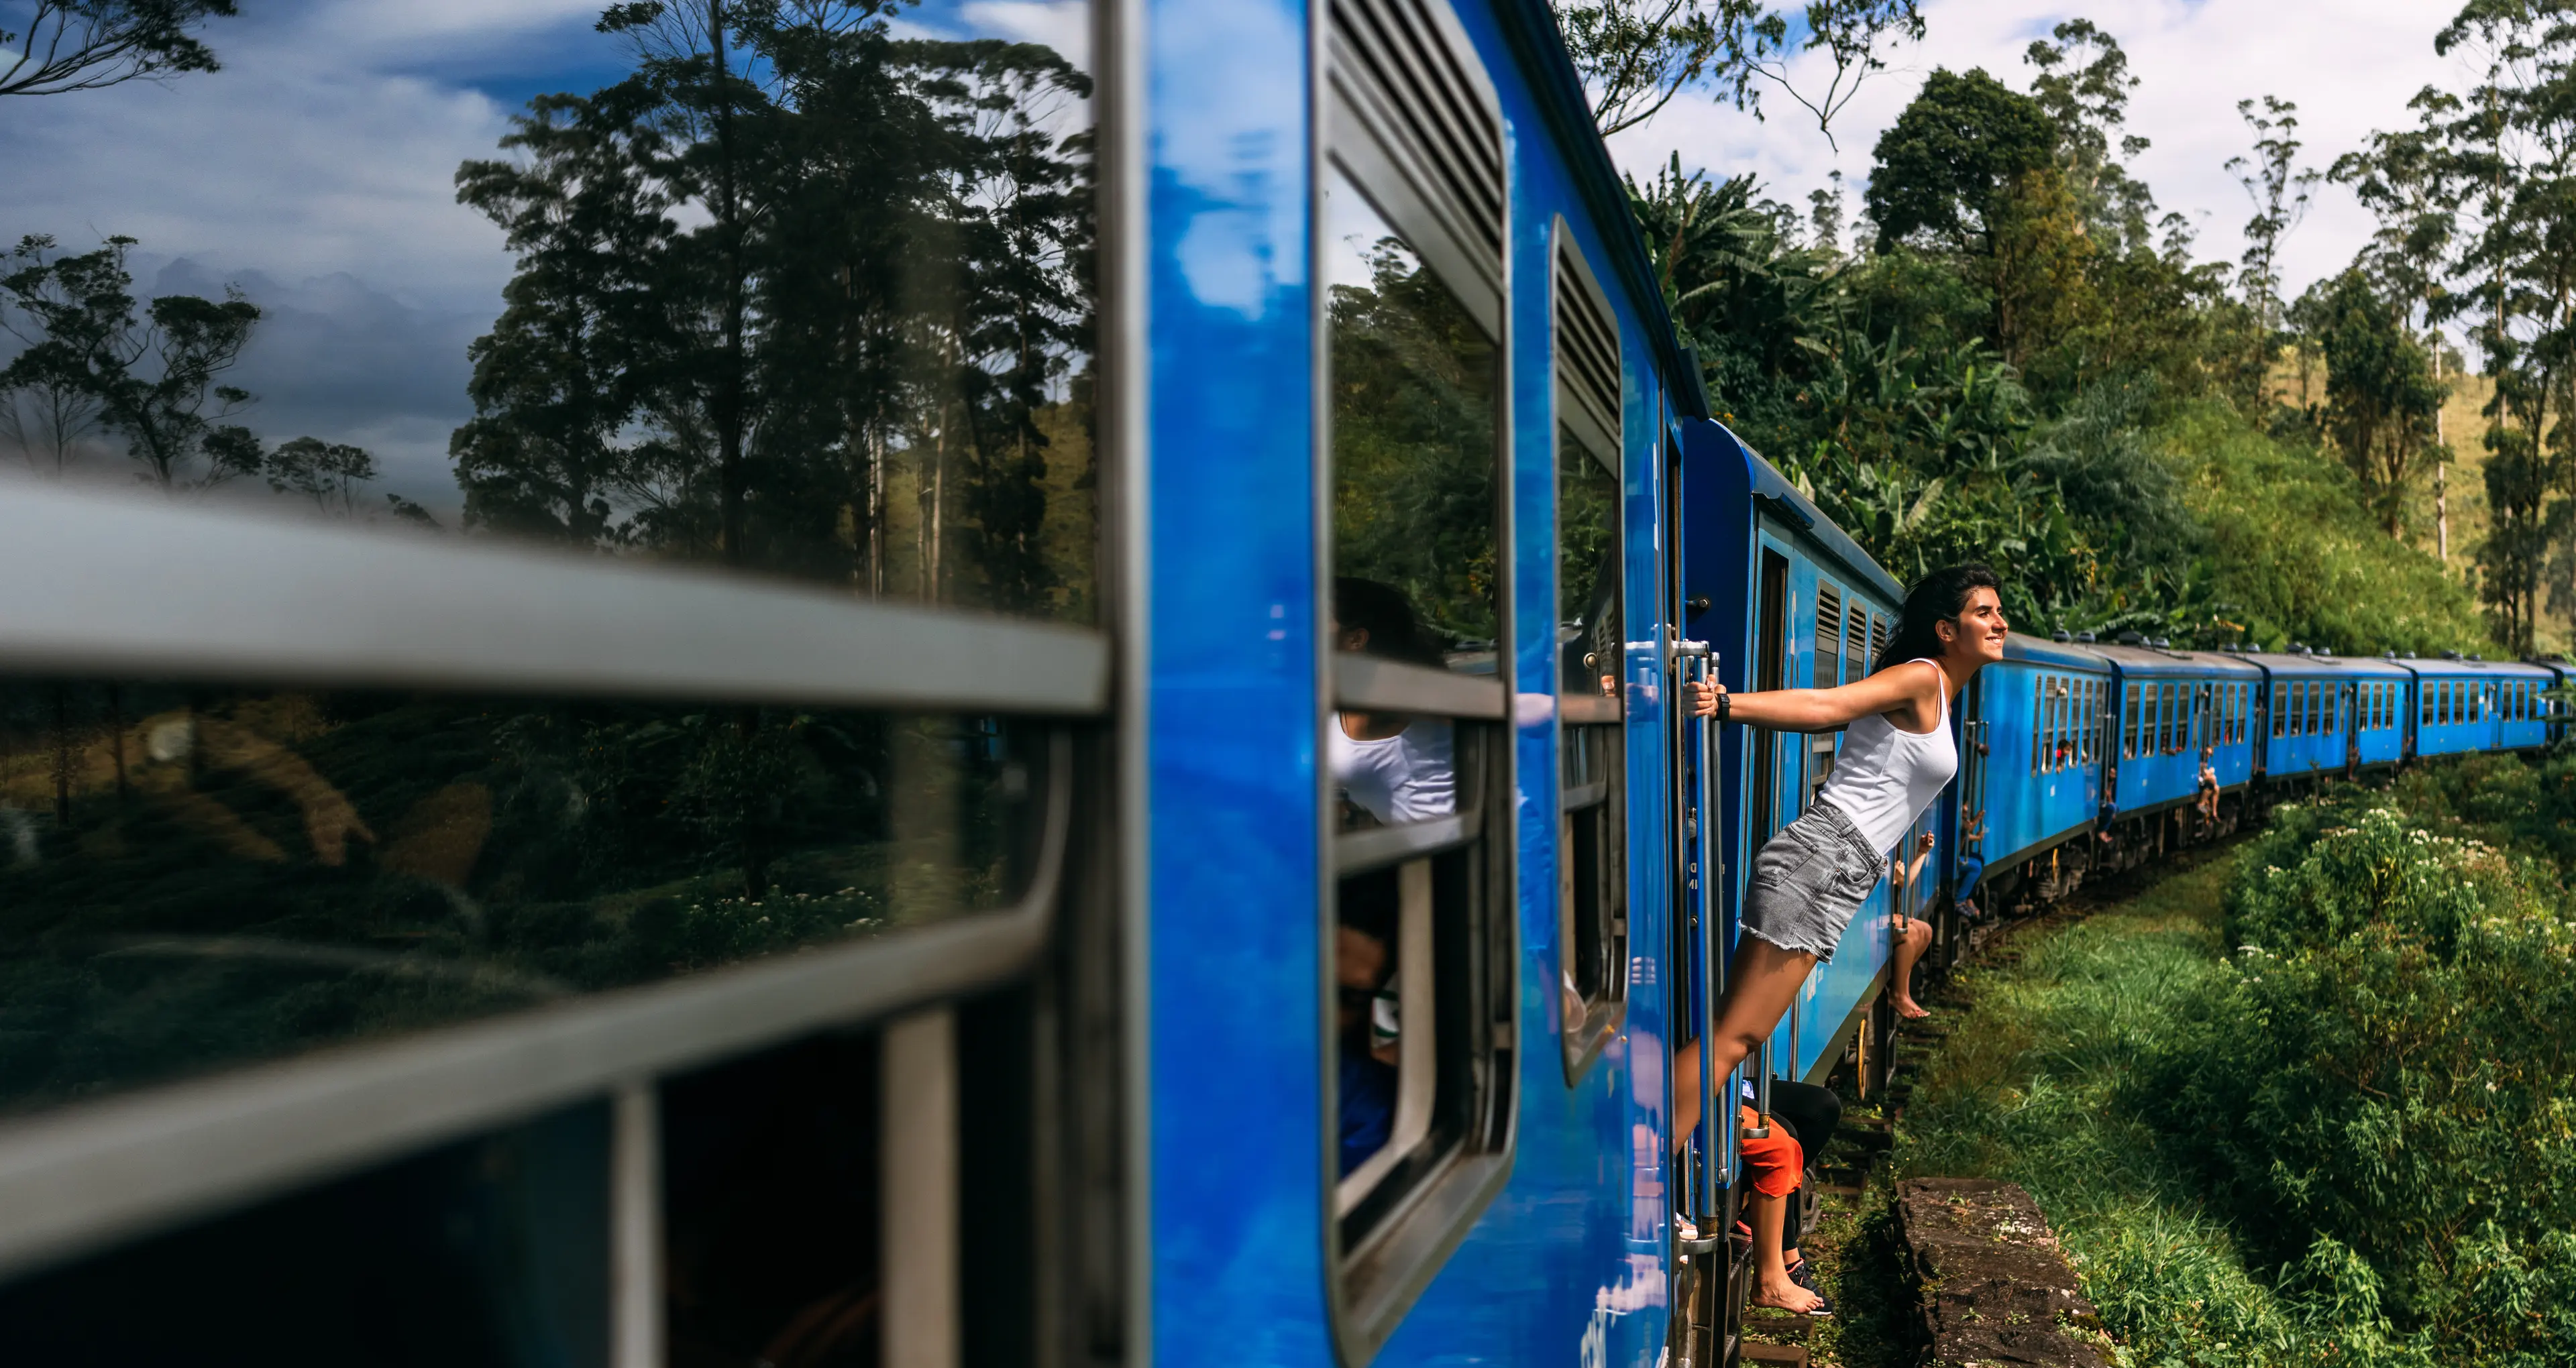 Train ride to Kandy